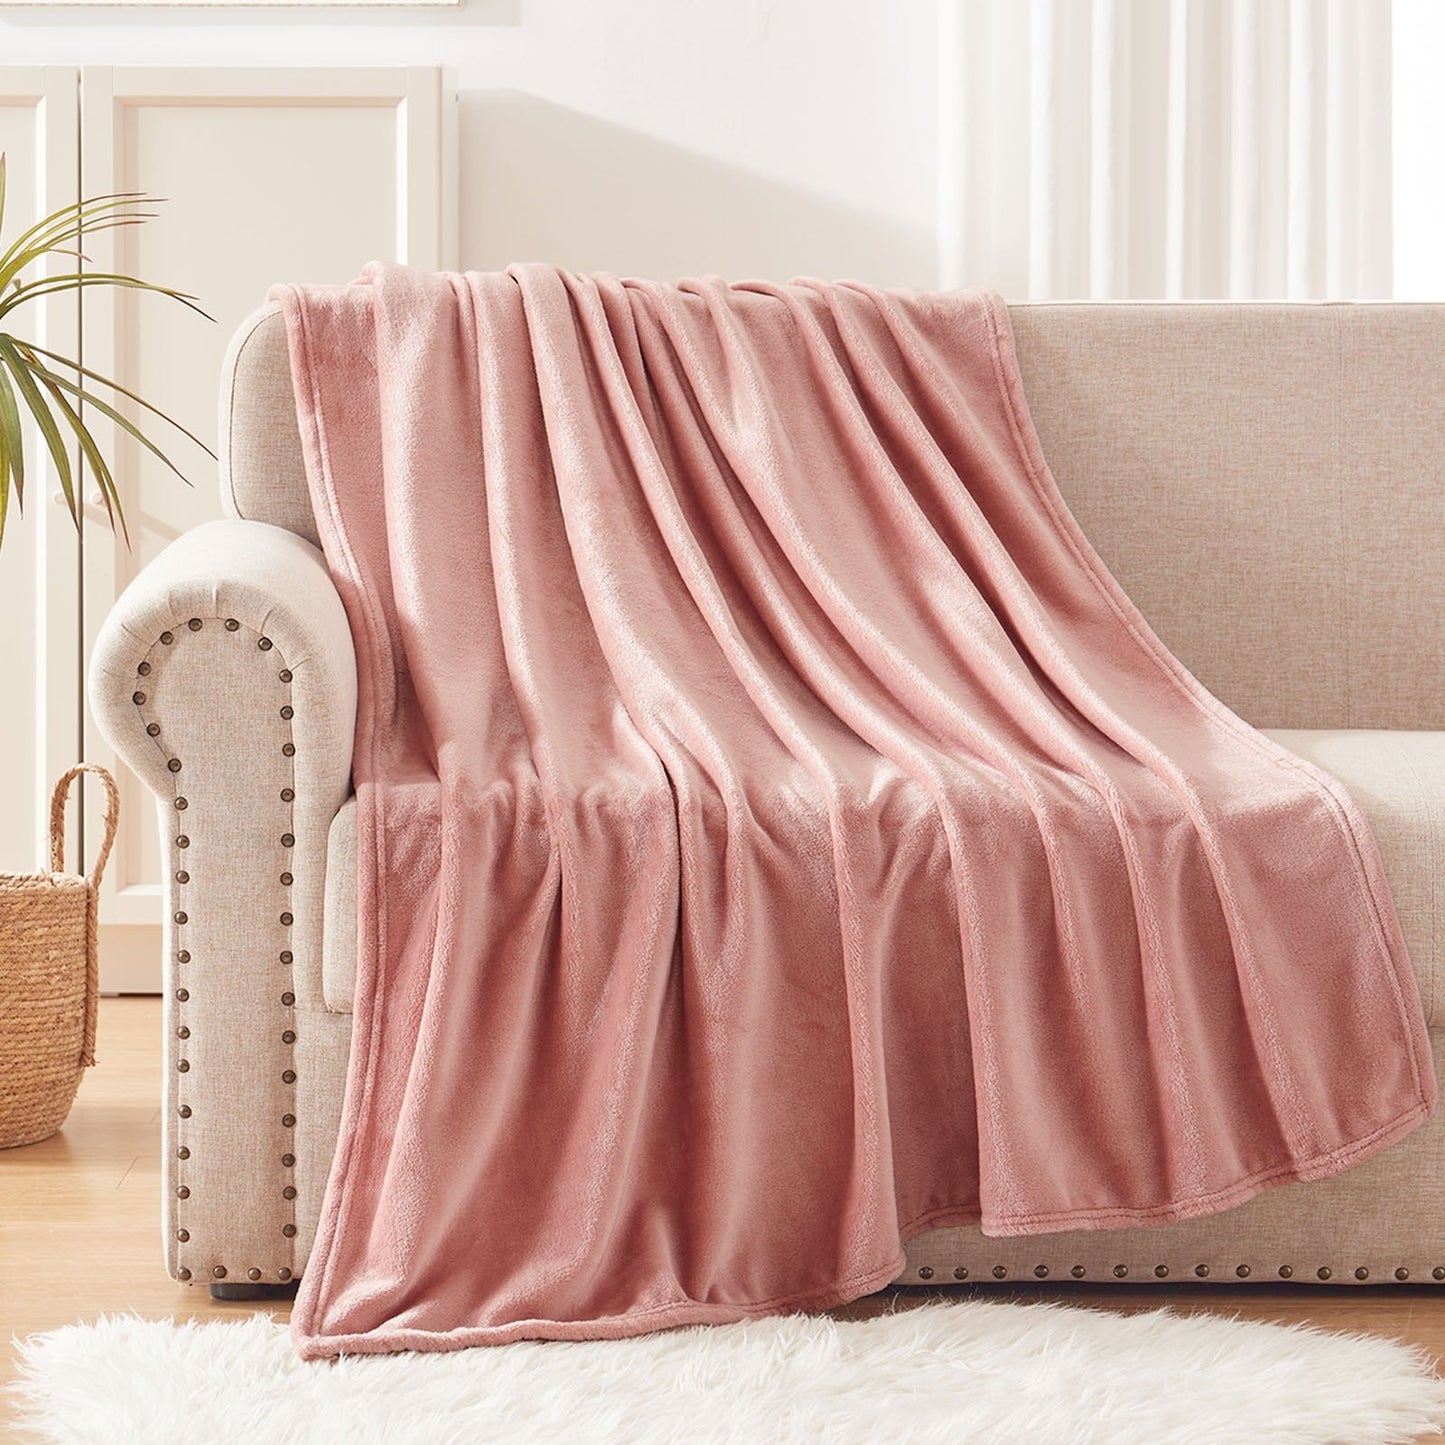 Exclusivo Mezcla Large Flannel Fleece Velvet Plush Large Throw Blanket ¨C 50" x 60" (Pink)